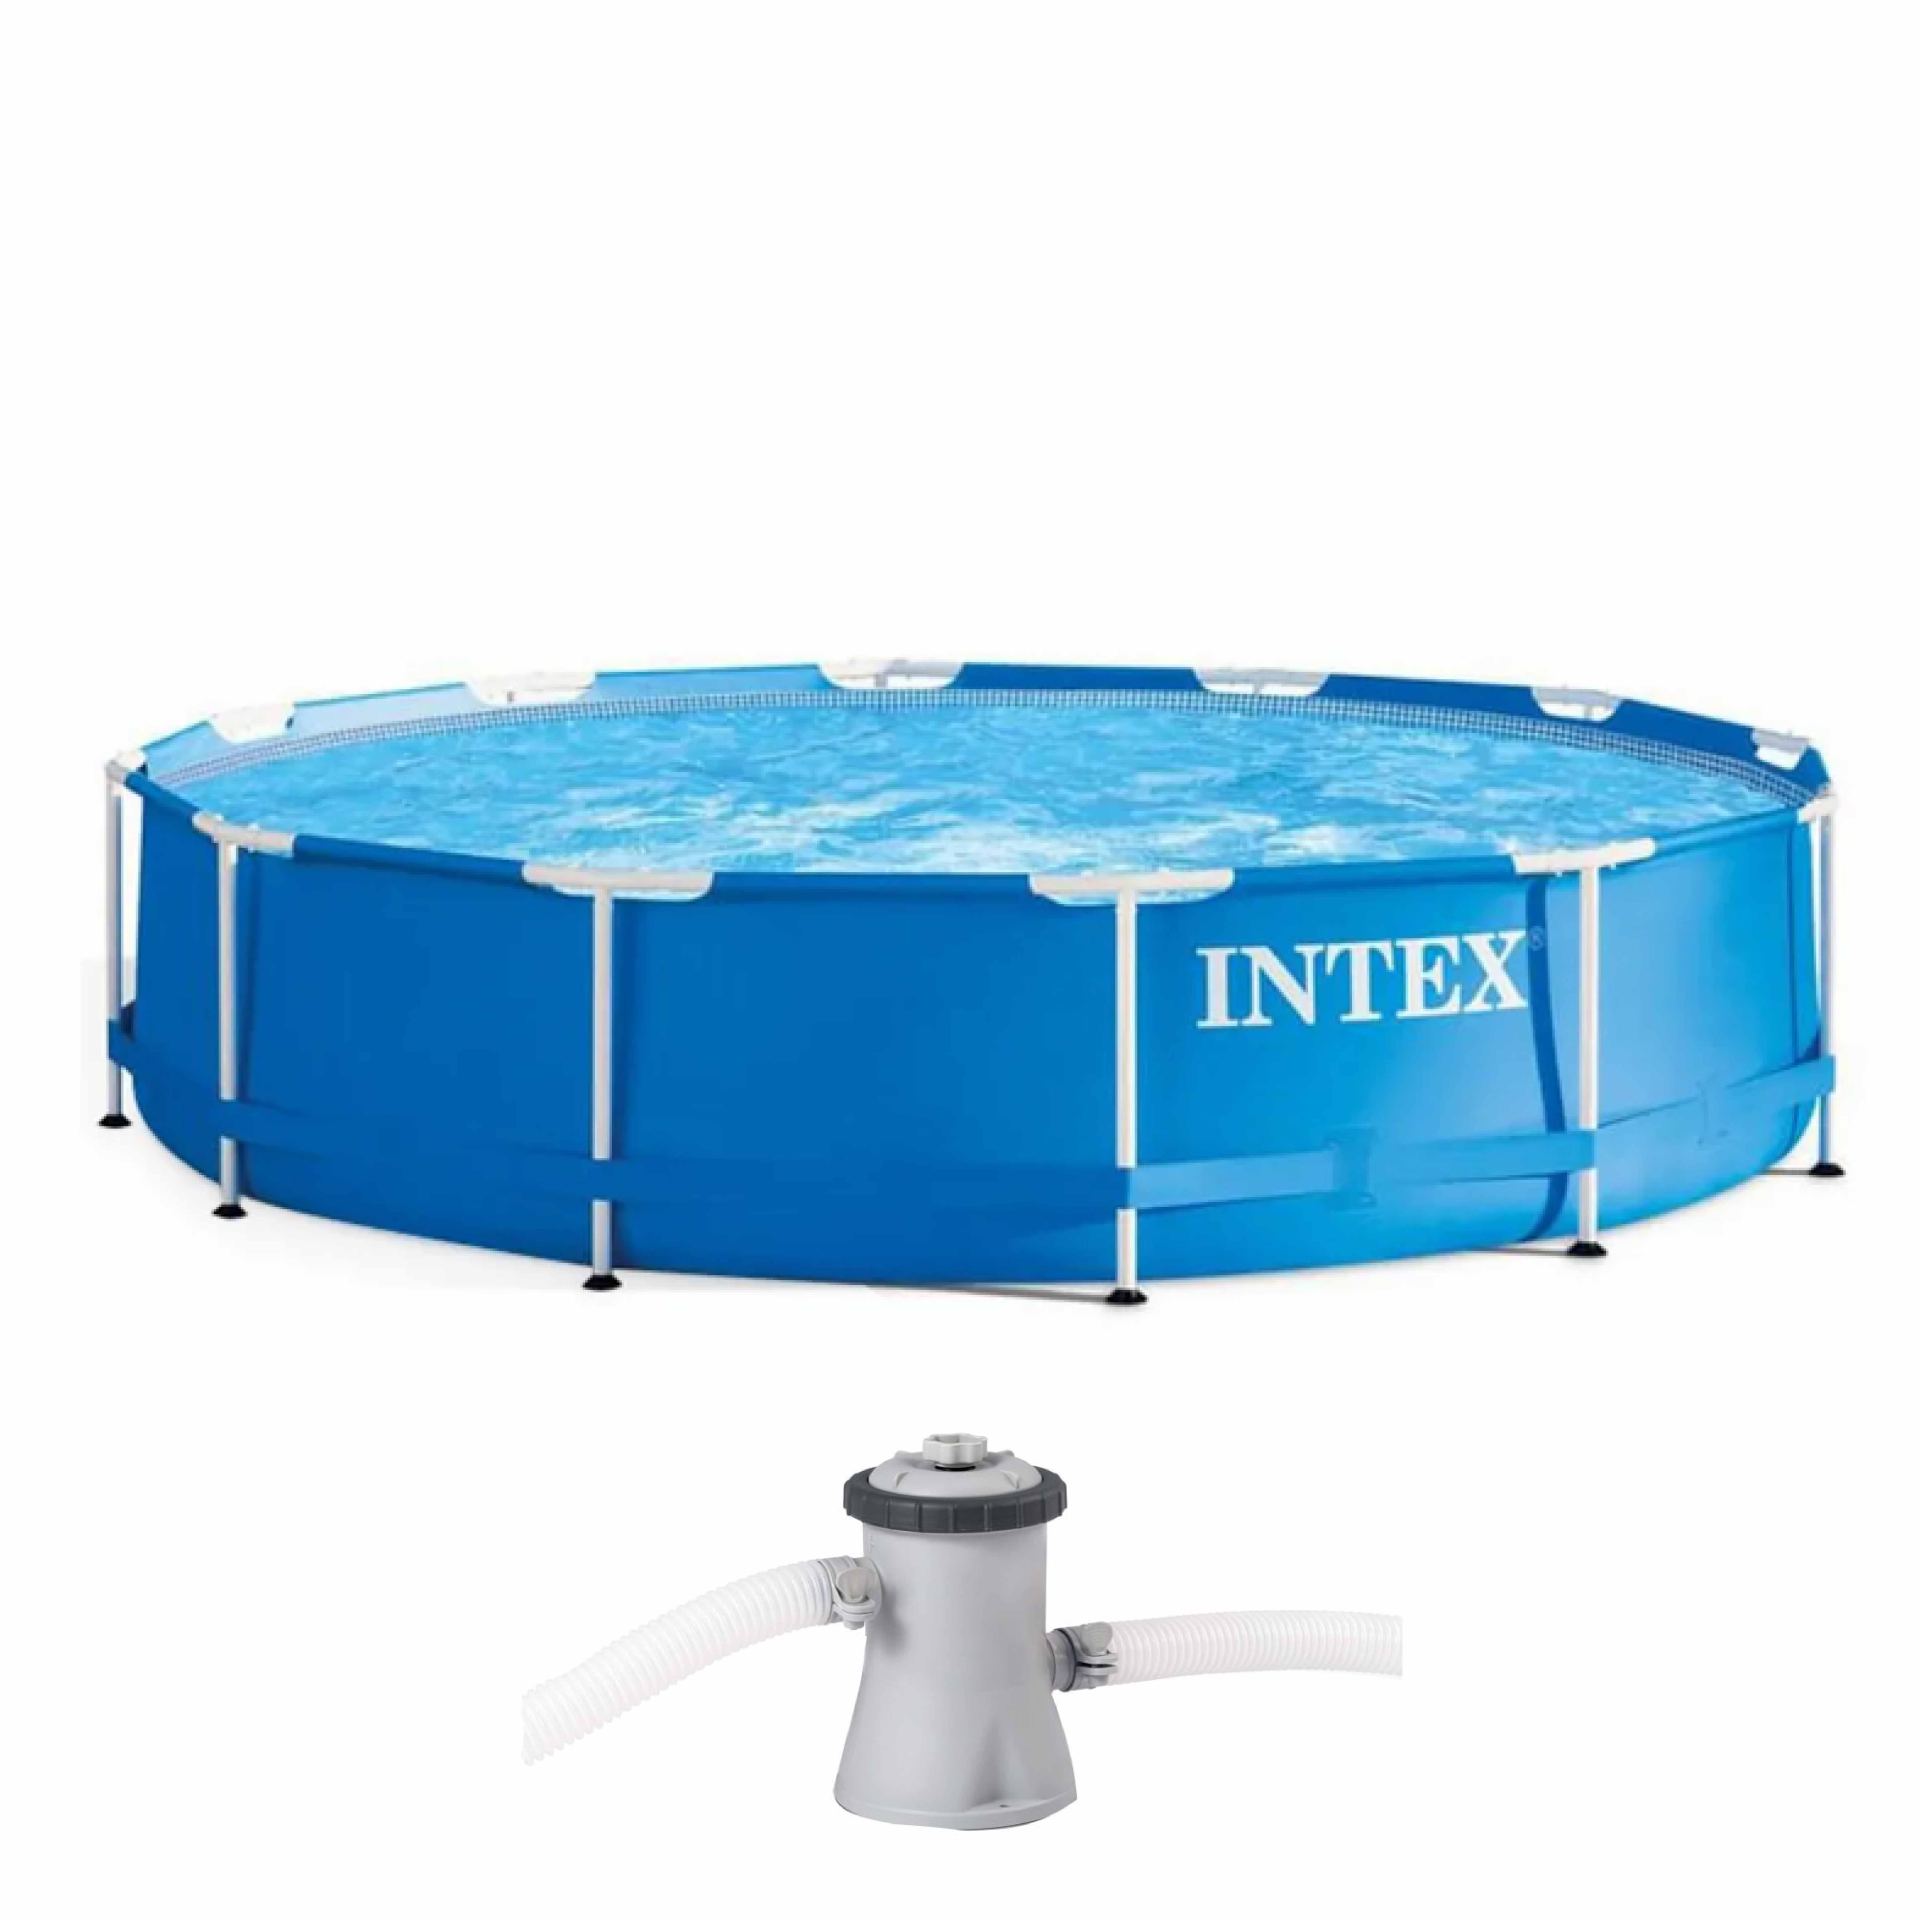 Intex metal frame pool set 305cm x 76cm